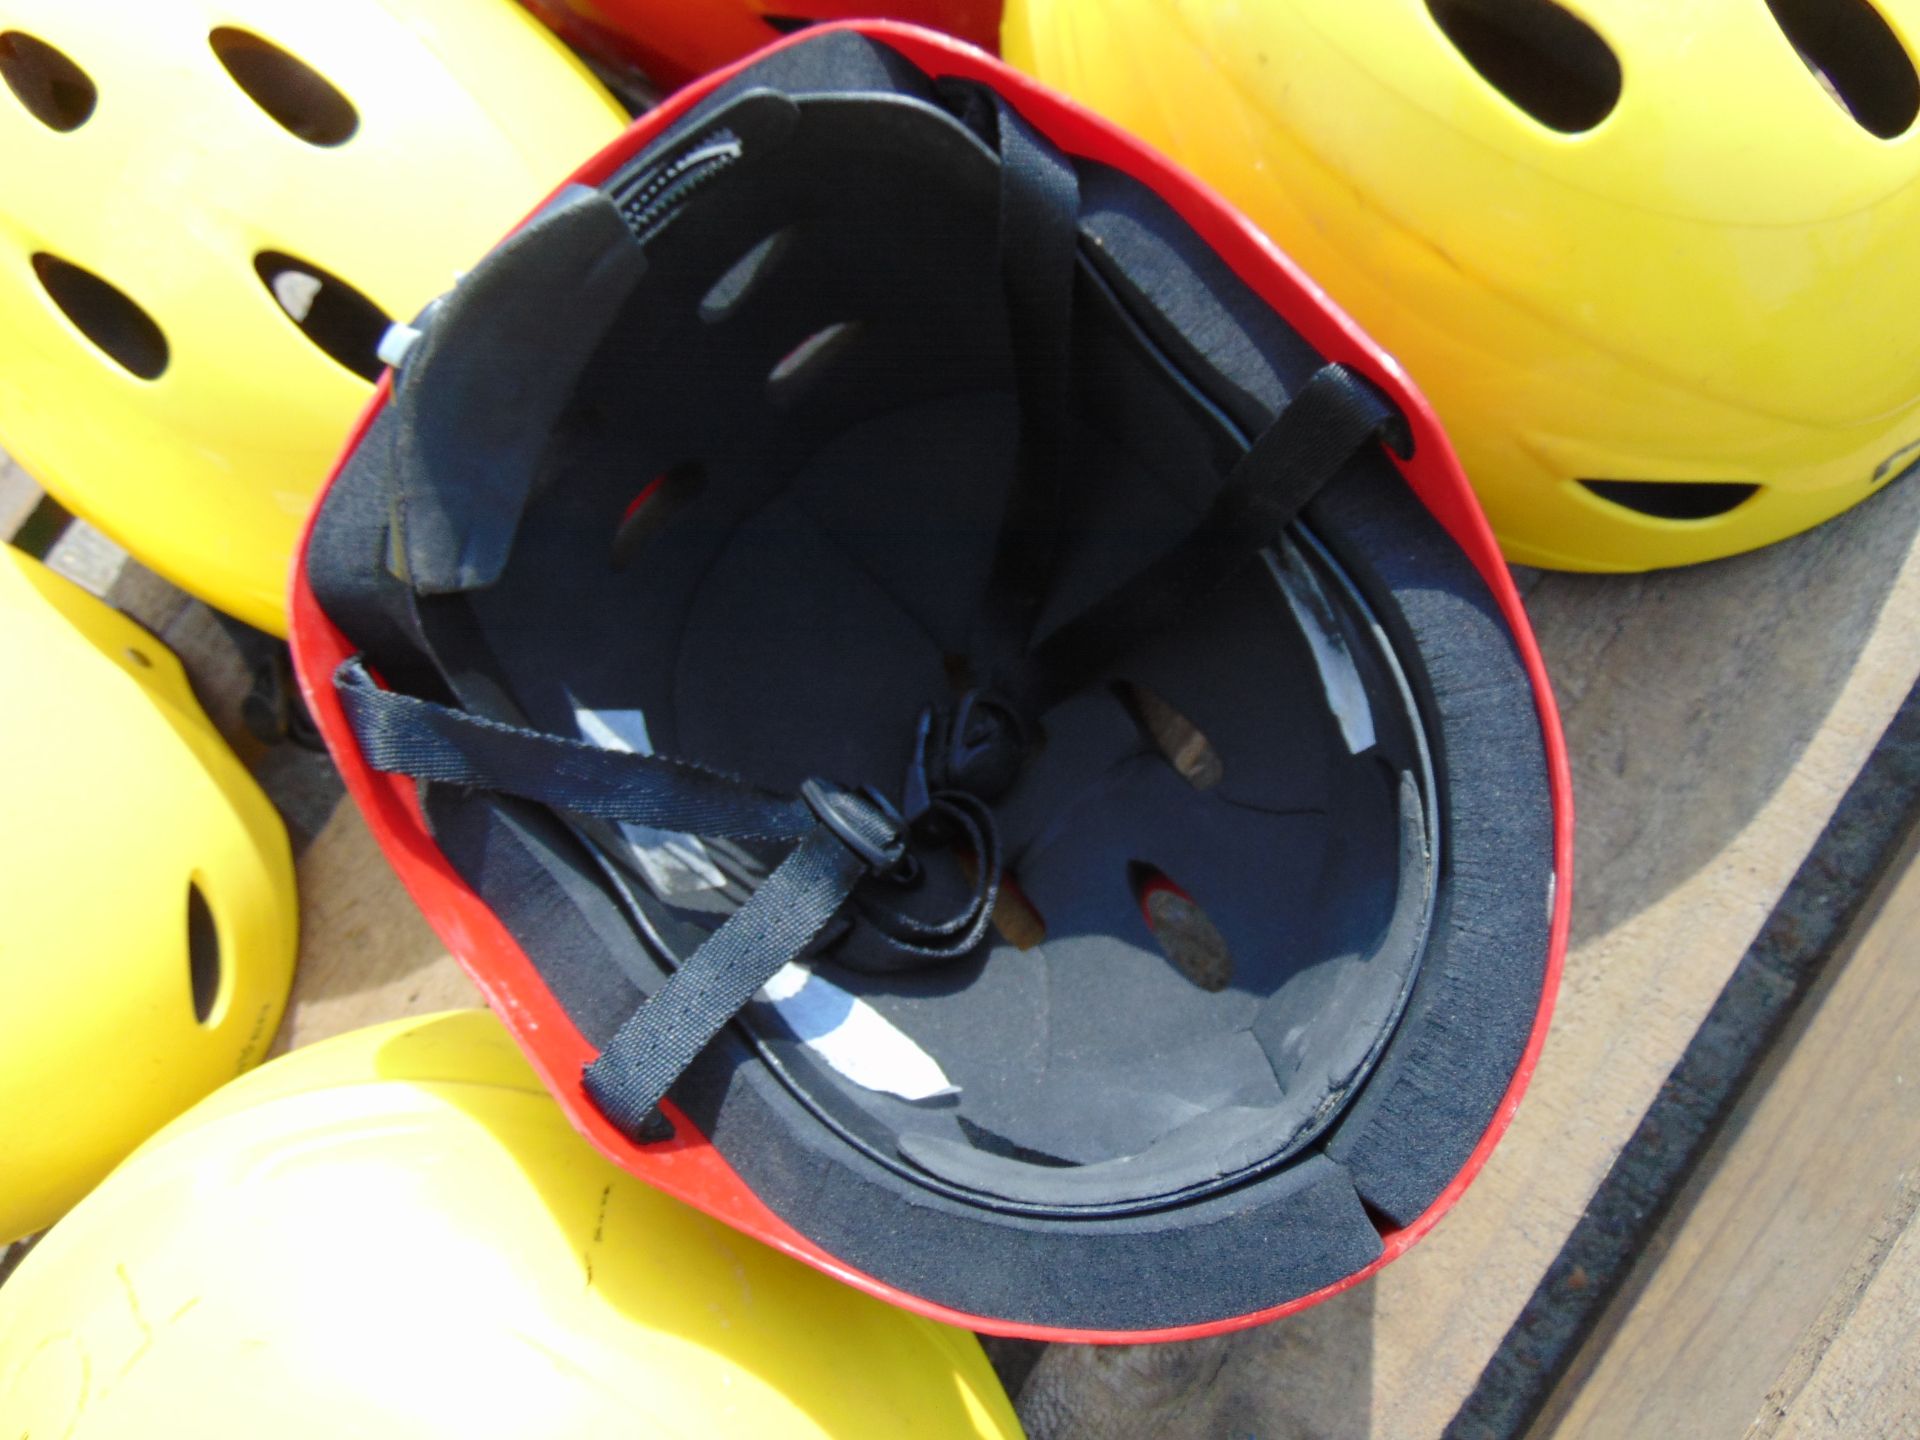 10 x Climbing-White Water Rafting-Kayak Etc Safety Helmets - Image 3 of 3